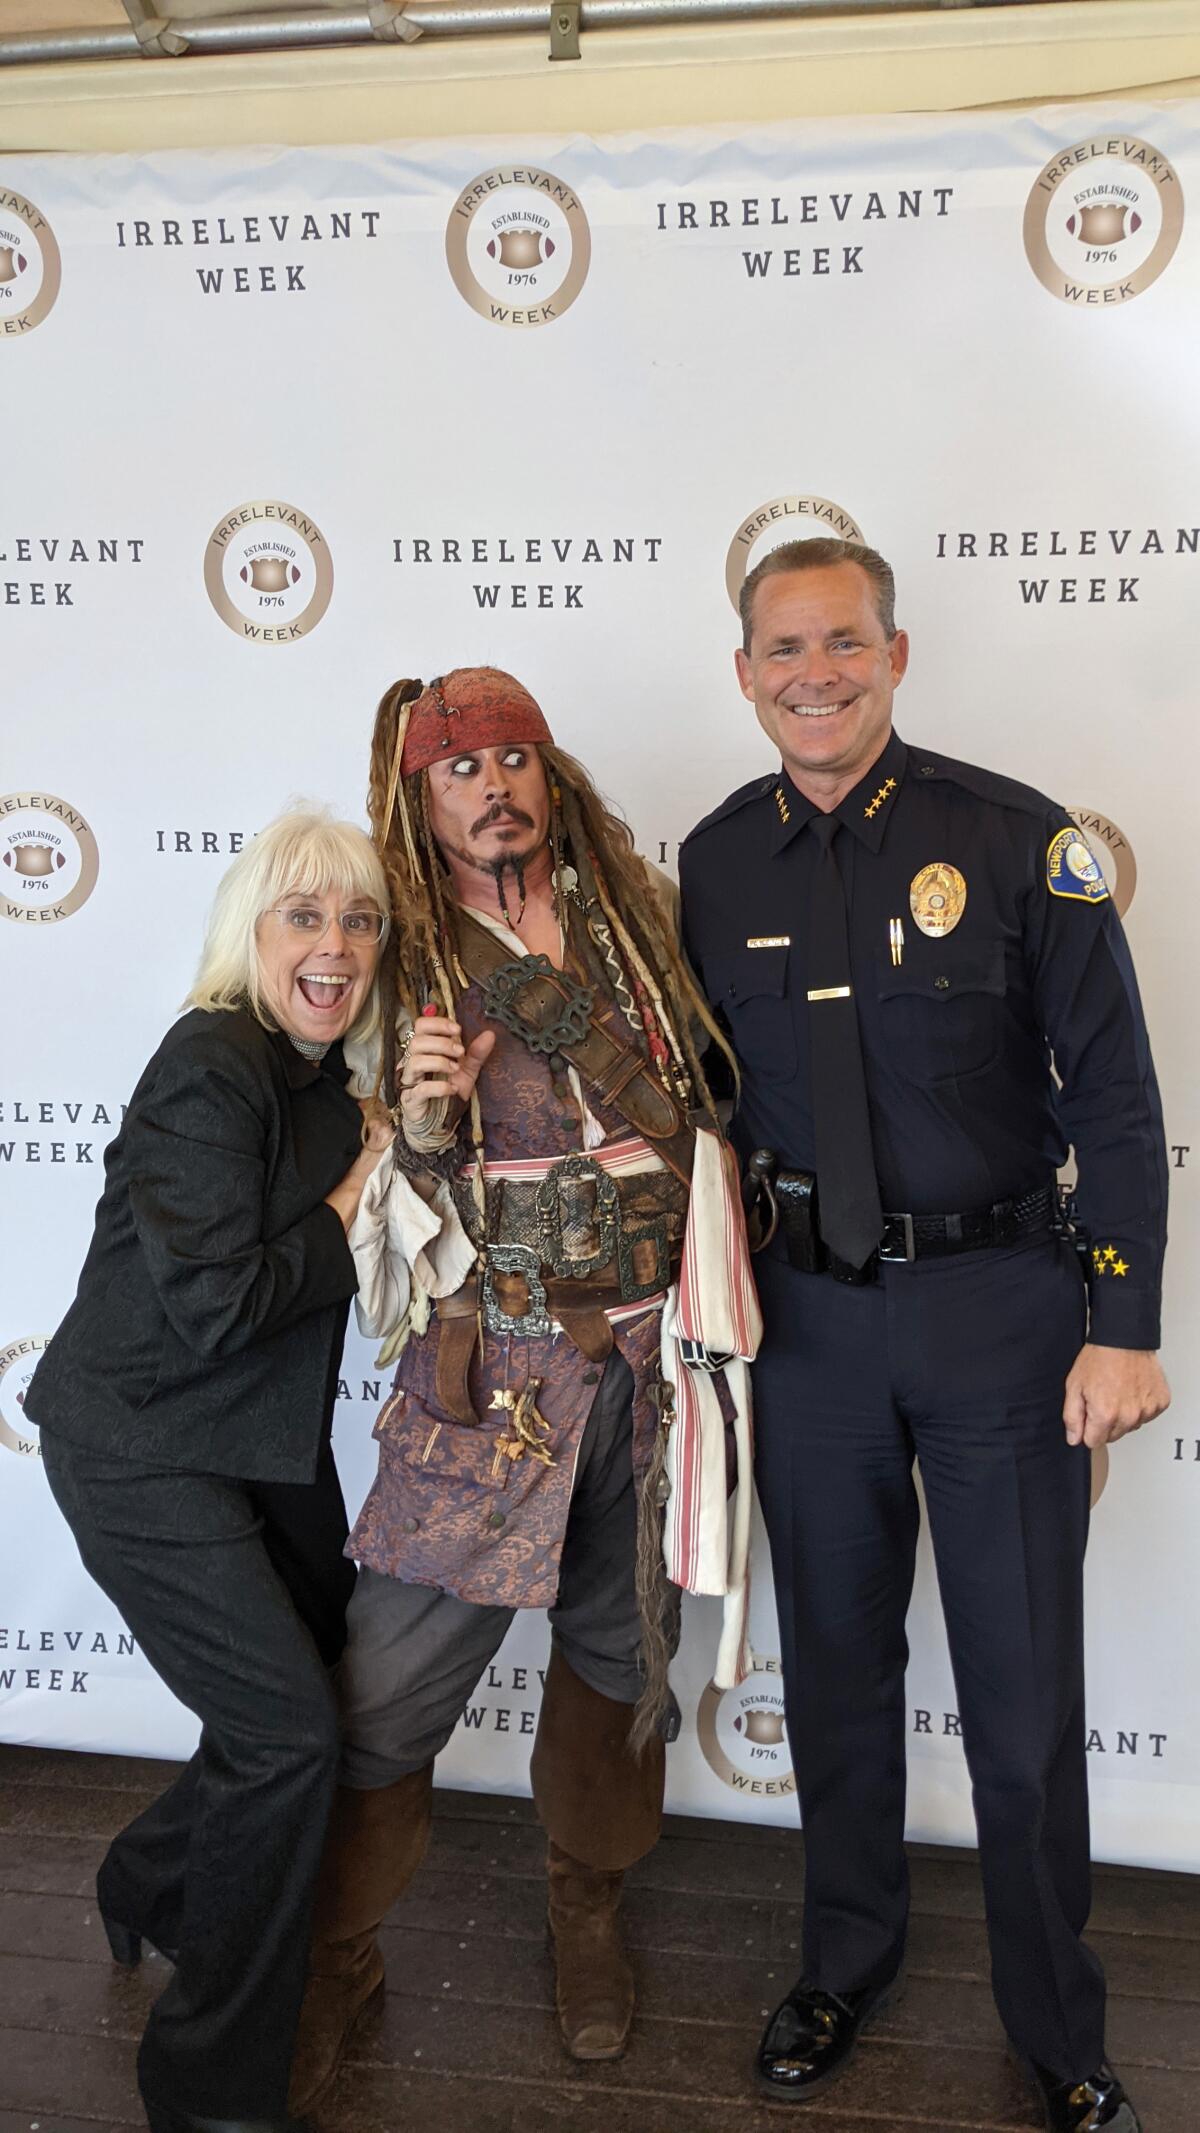 Irrelevant Week chairman Melanie Fitch, "Jack Sparrow" and Police Chief John Lewis at Irrelevant Week banquet.